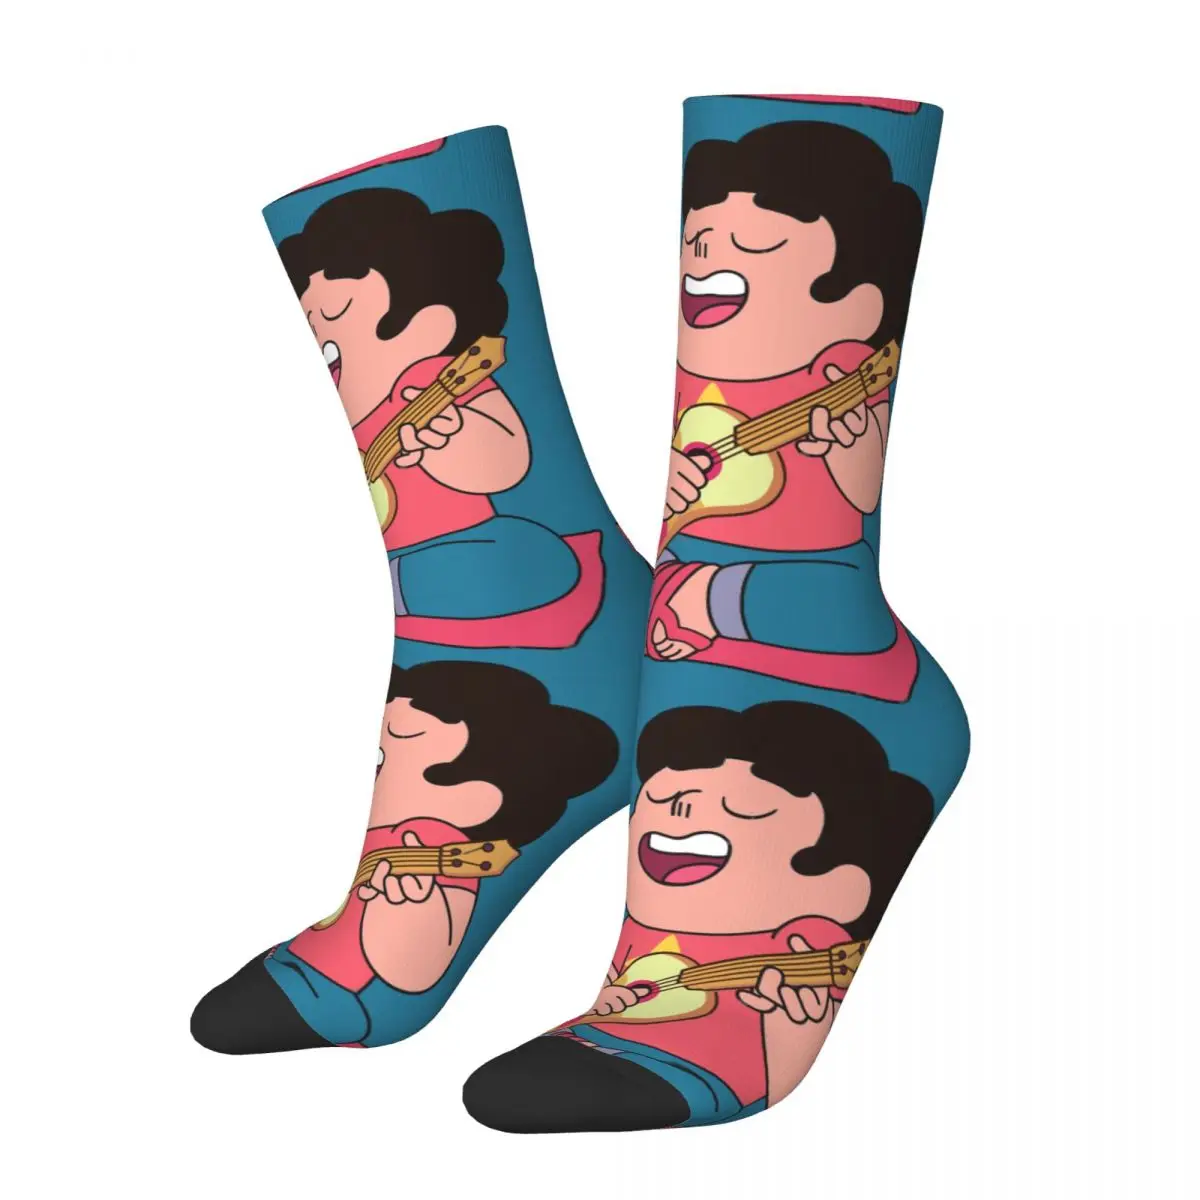 

Забавные сумасшедшие носки для мужчин, забавные и классические носки в стиле хип-хоп Harajuku Steven Universe, анимация, научная фантастика, качественн...